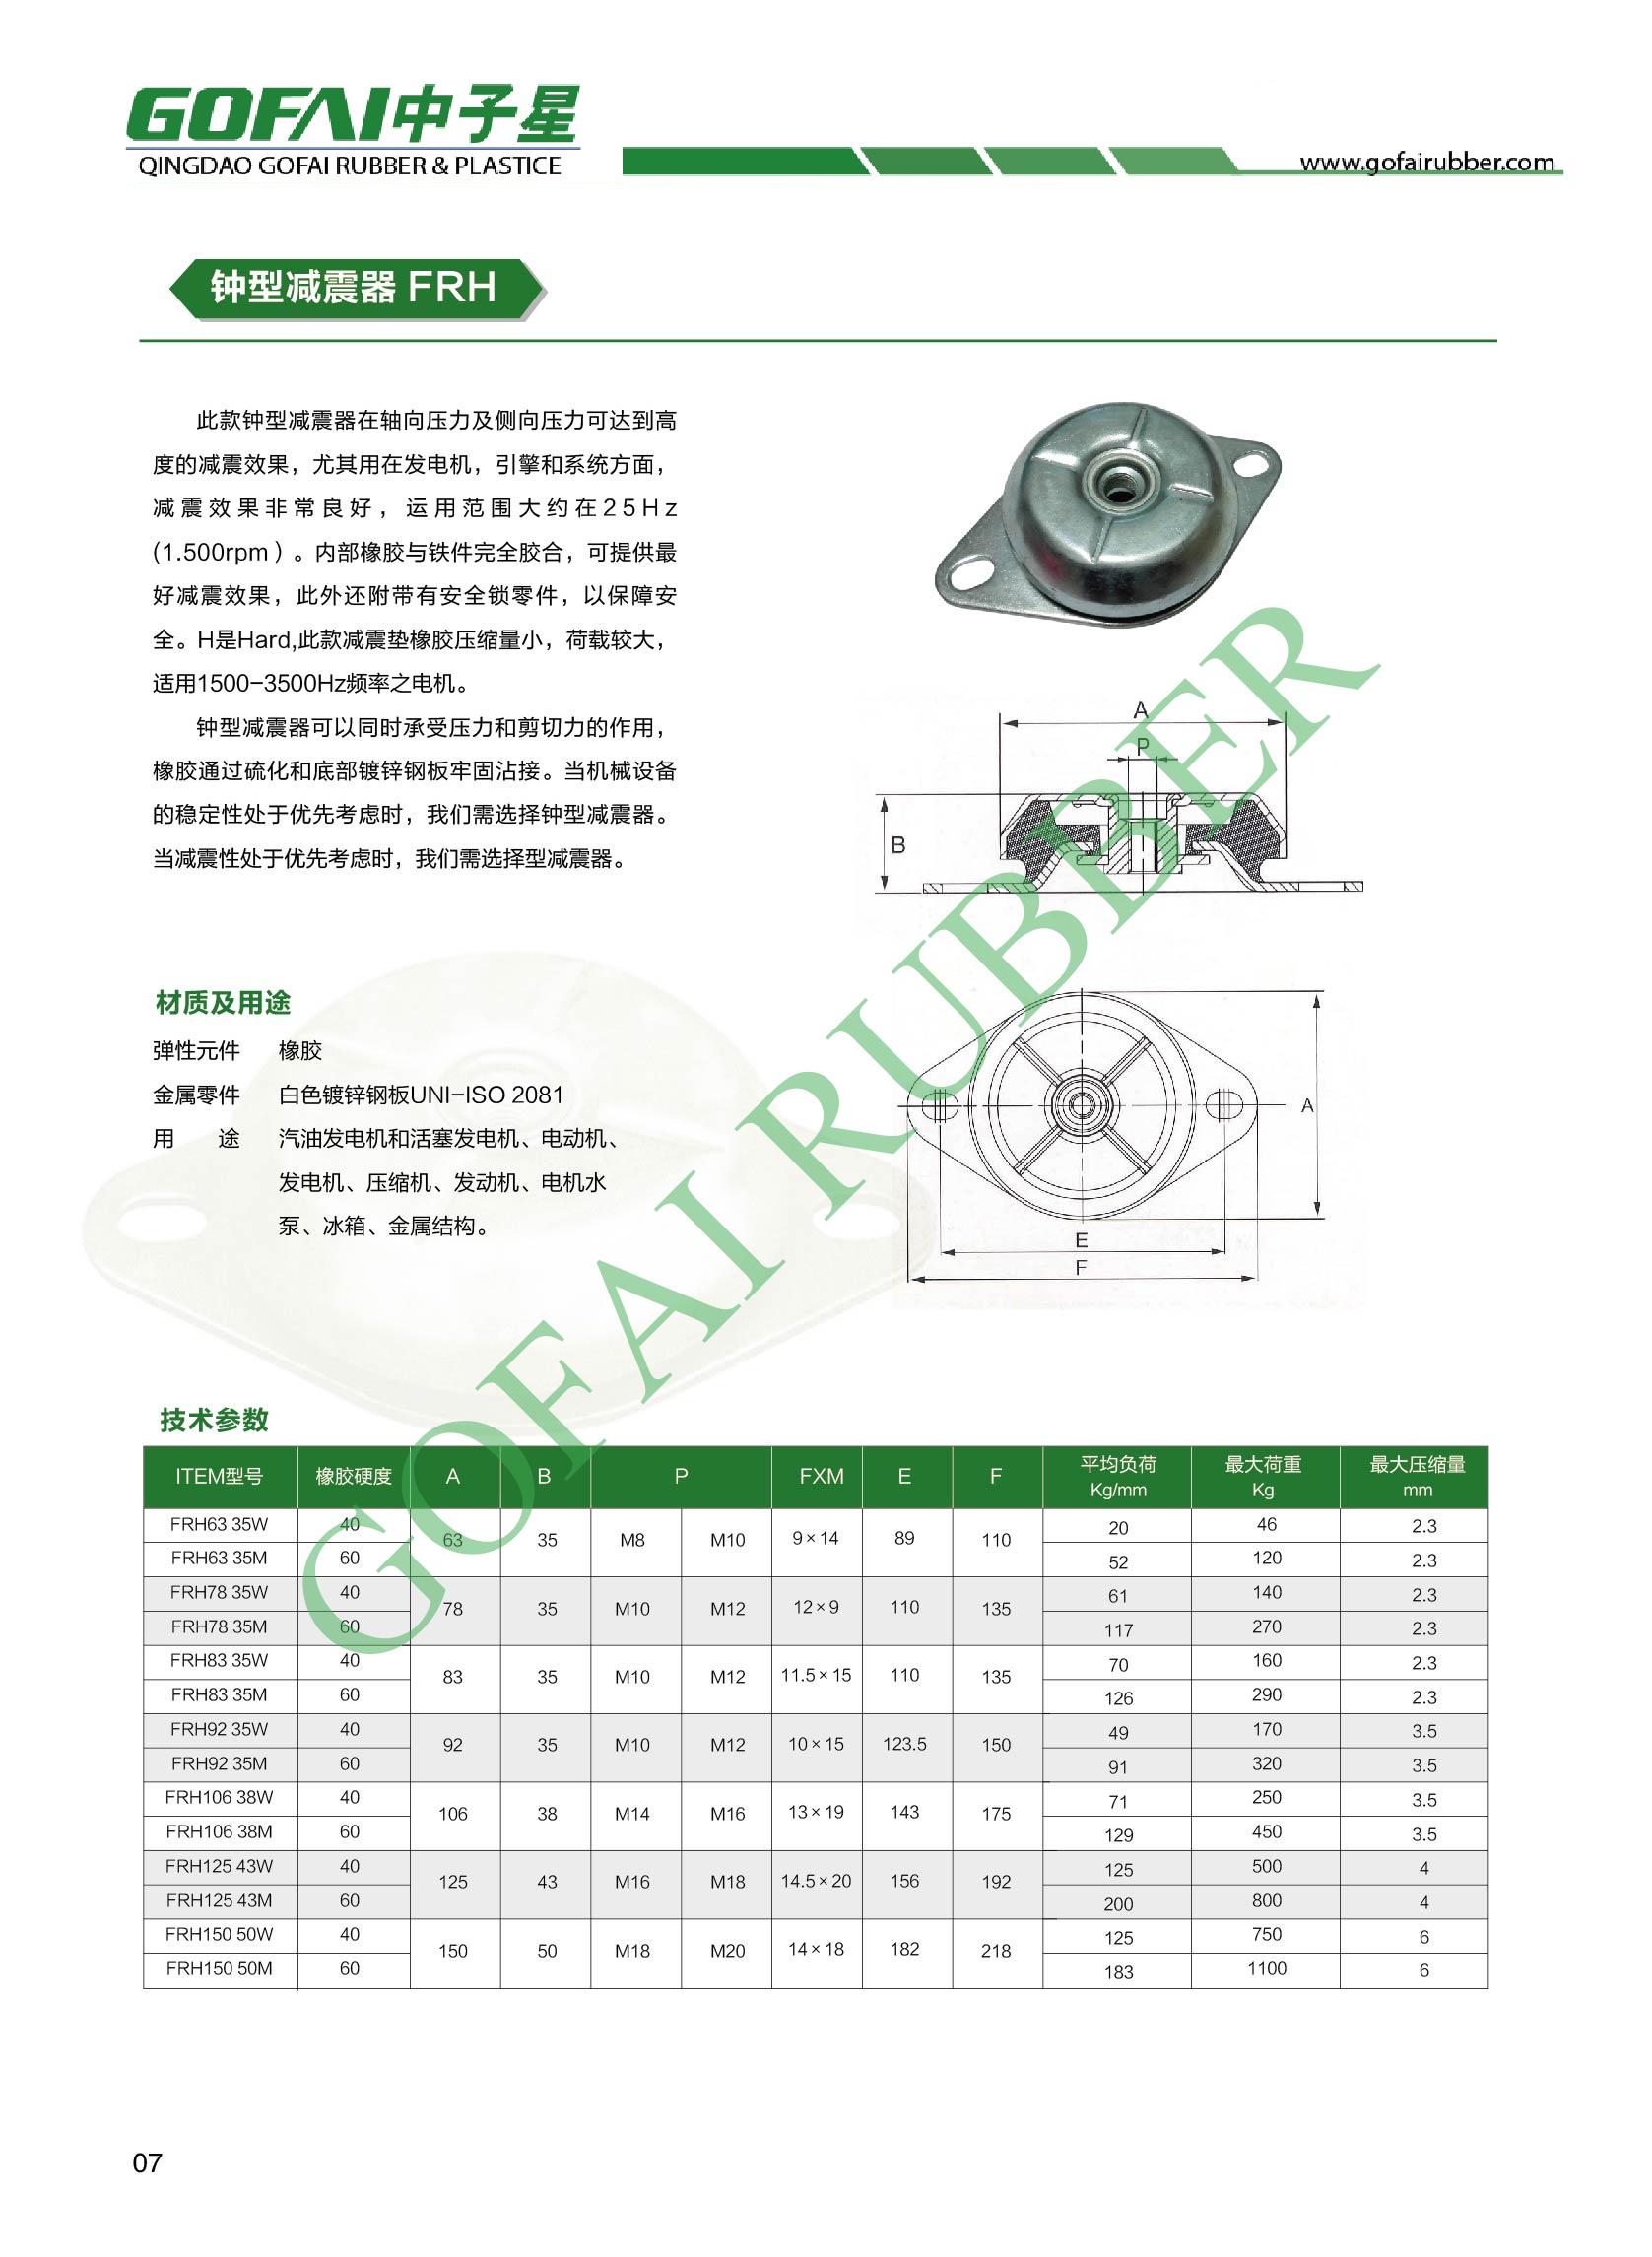 GOFAI catalog for rubber anti-vibration mounts_5.jpg